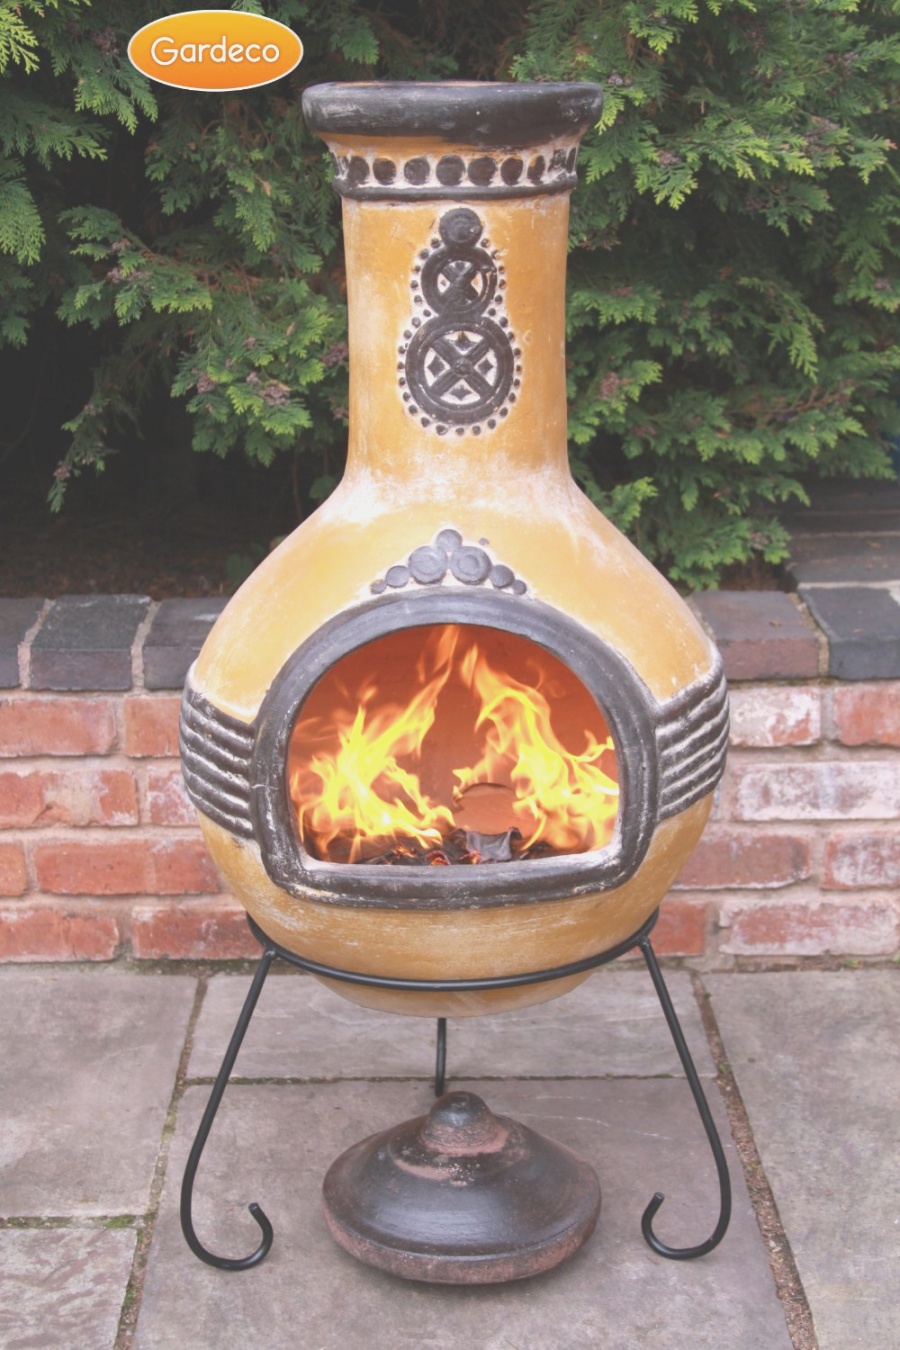 terracotta chiminea | chiminea fire pit designs » Design and Ideas | terracotta chiminea